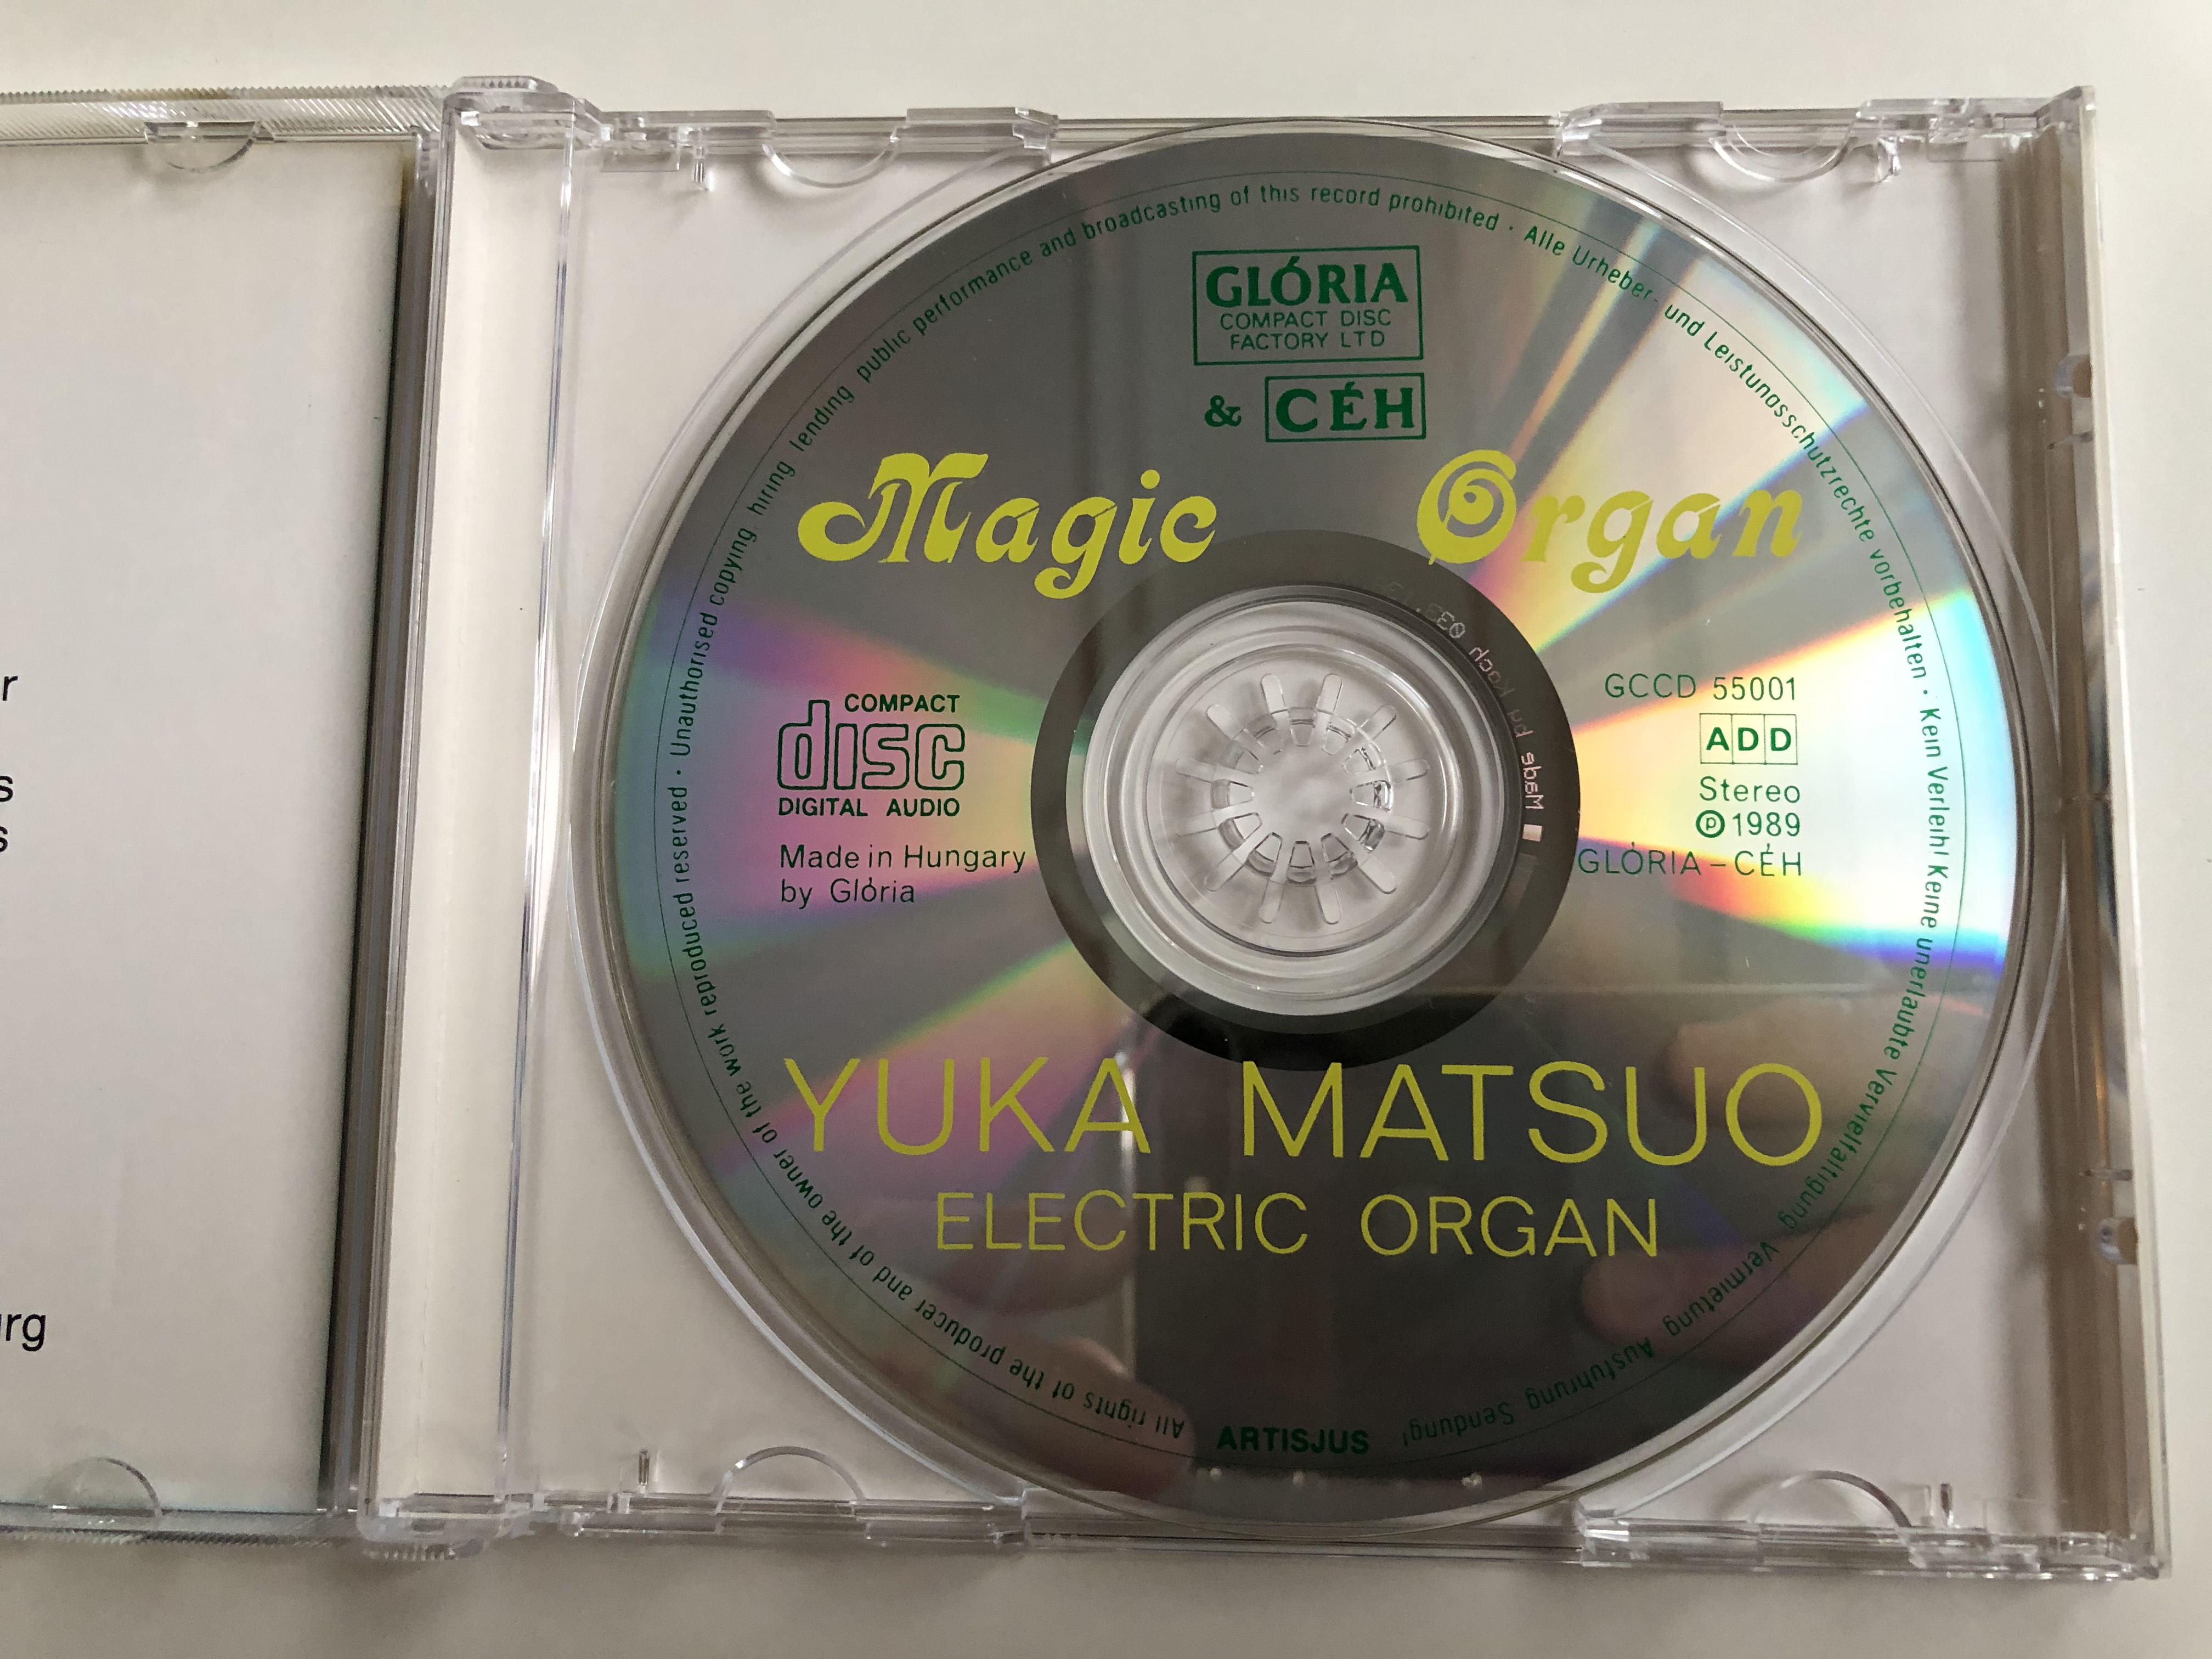 magic-organ-yuka-matsuo-electric-organ-gl-ria-audio-cd-1989-stereo-gccd-55001-3-.jpg